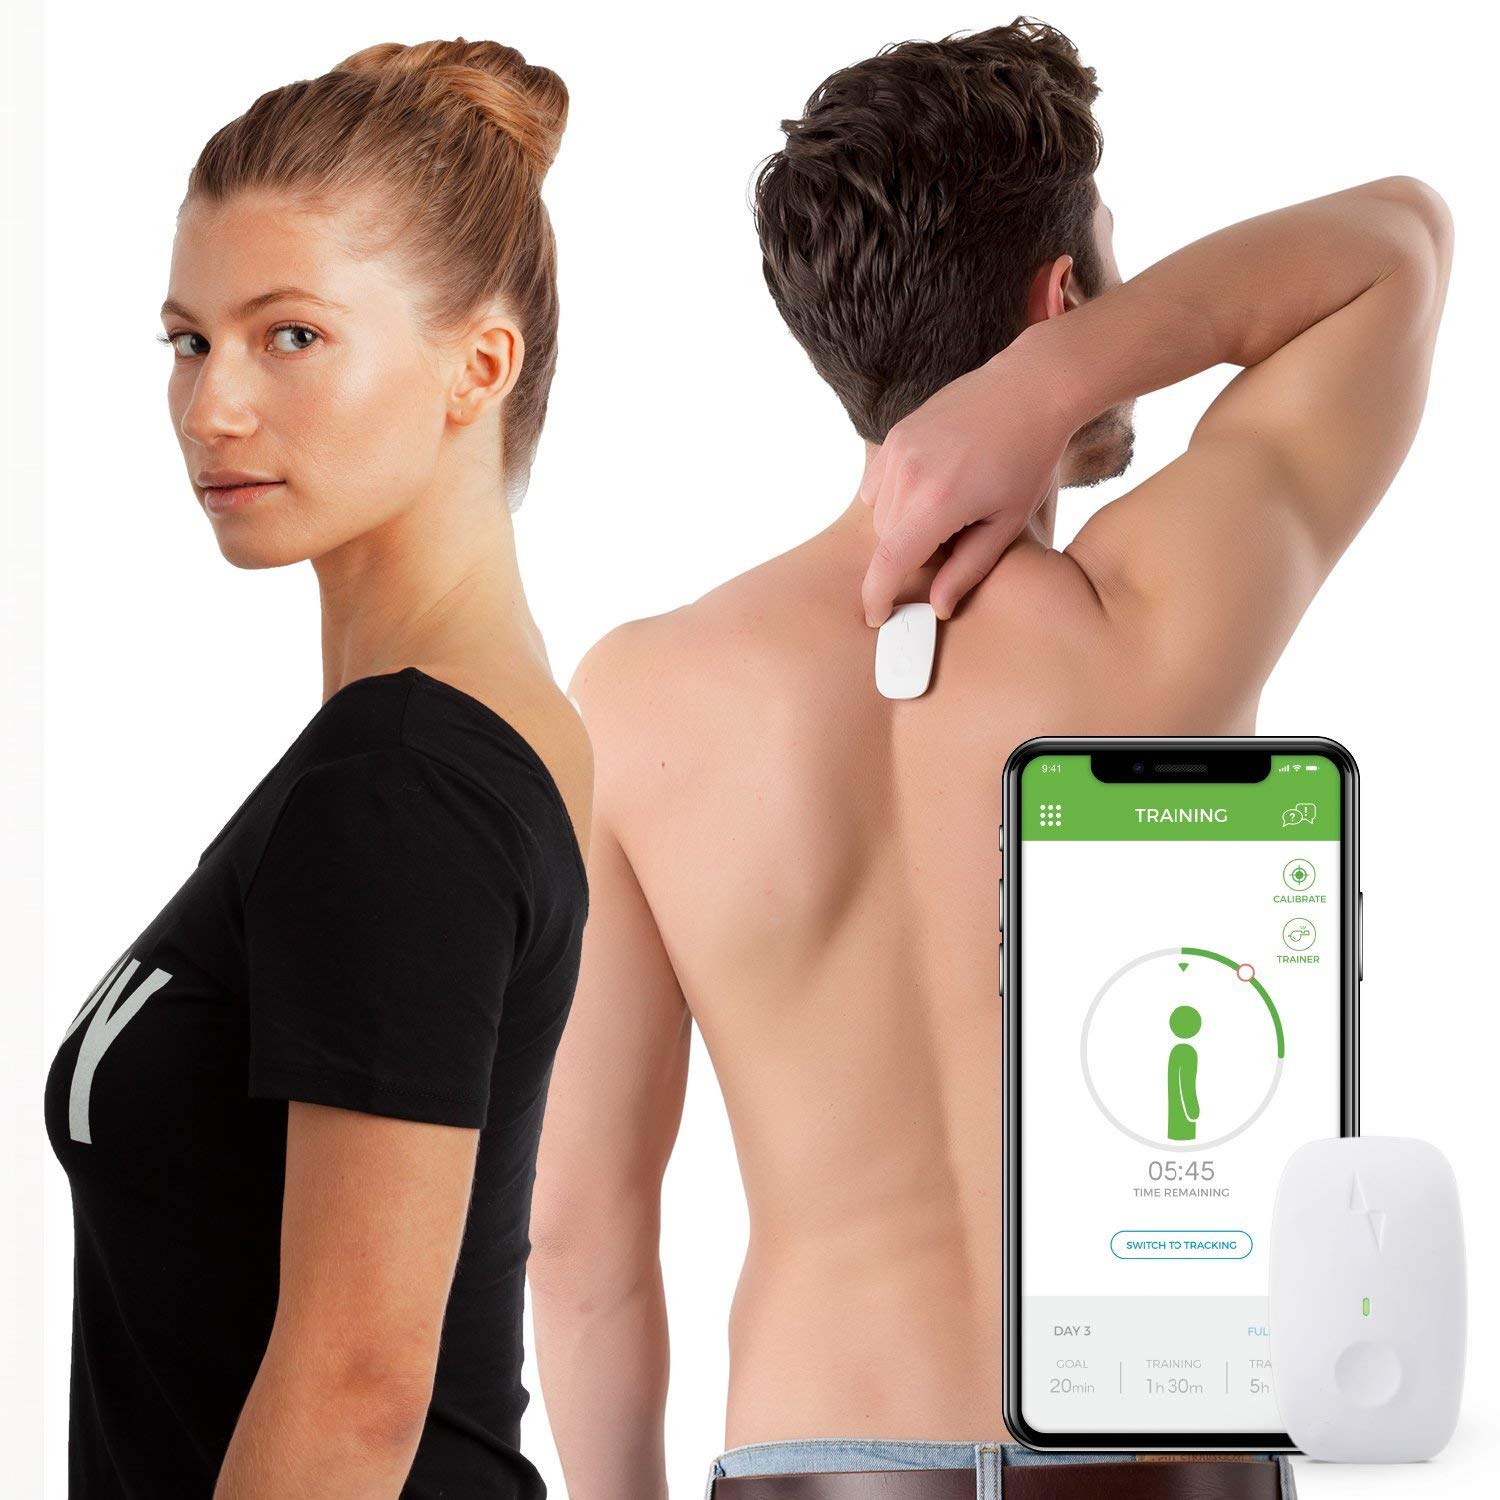 A demonstration of Upright Go posture training gadget